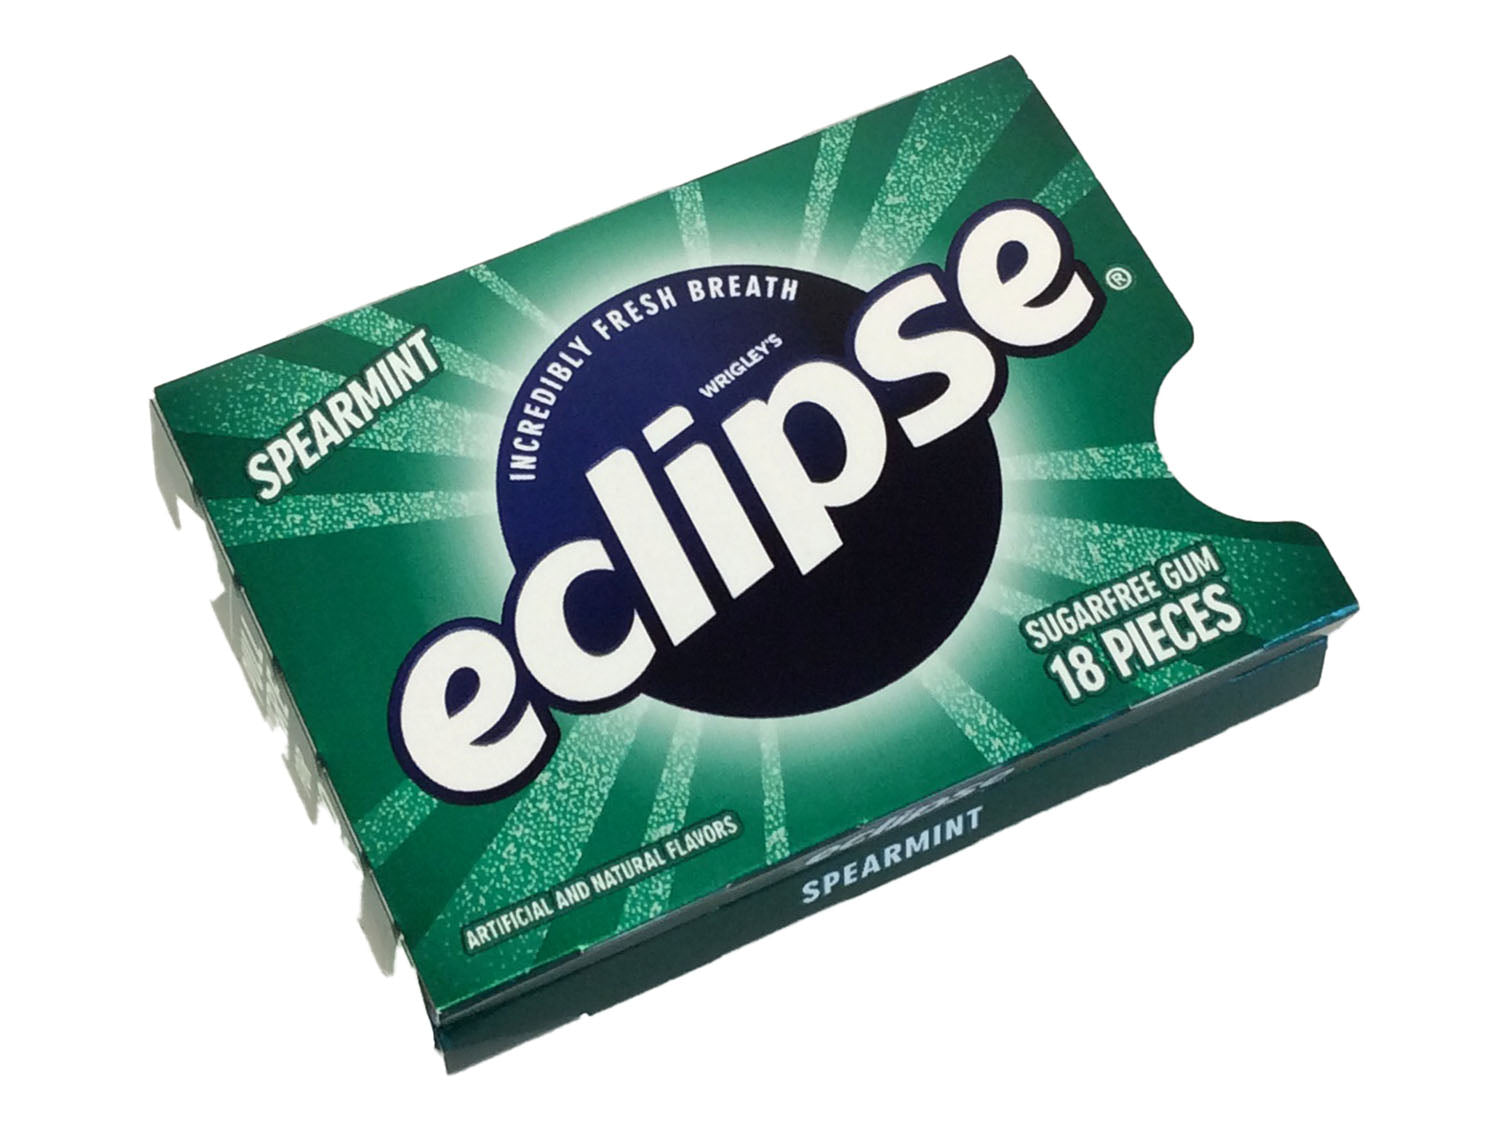 Eclipse Sugar-free Gum - Spearmint